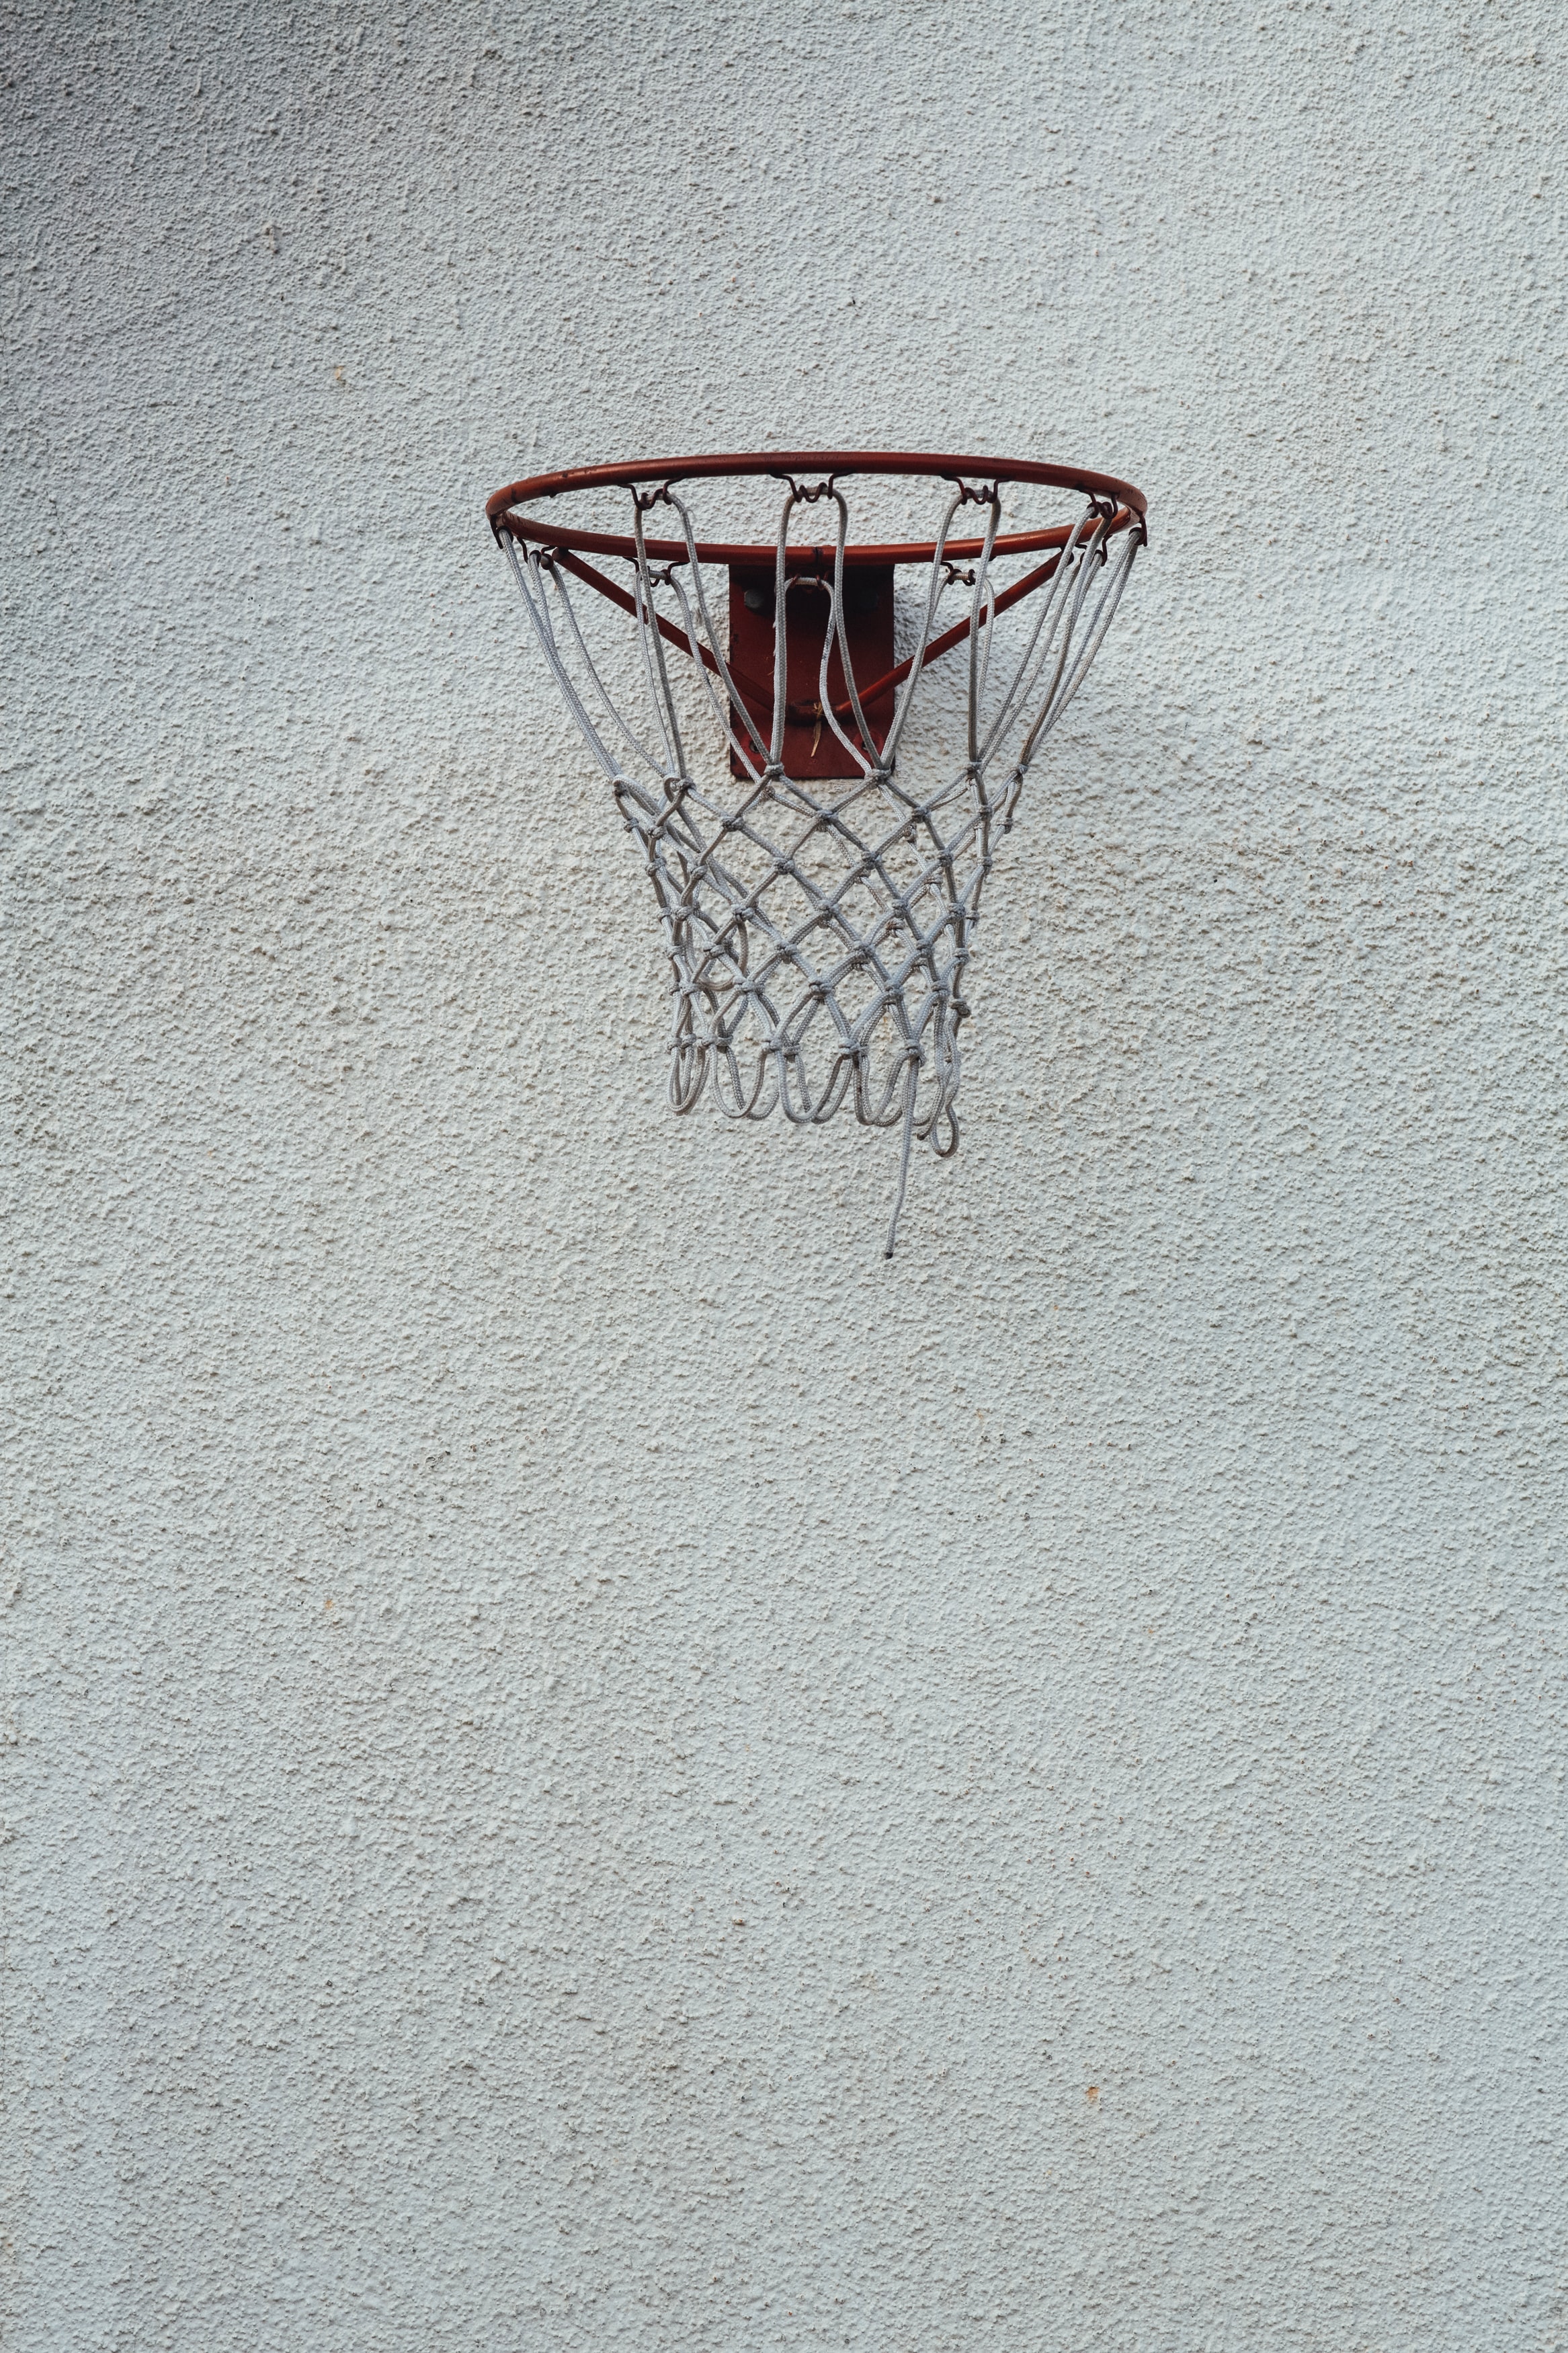 basketball, basketball hoop, basketball ring, miscellanea, miscellaneous, grid, wall Full HD